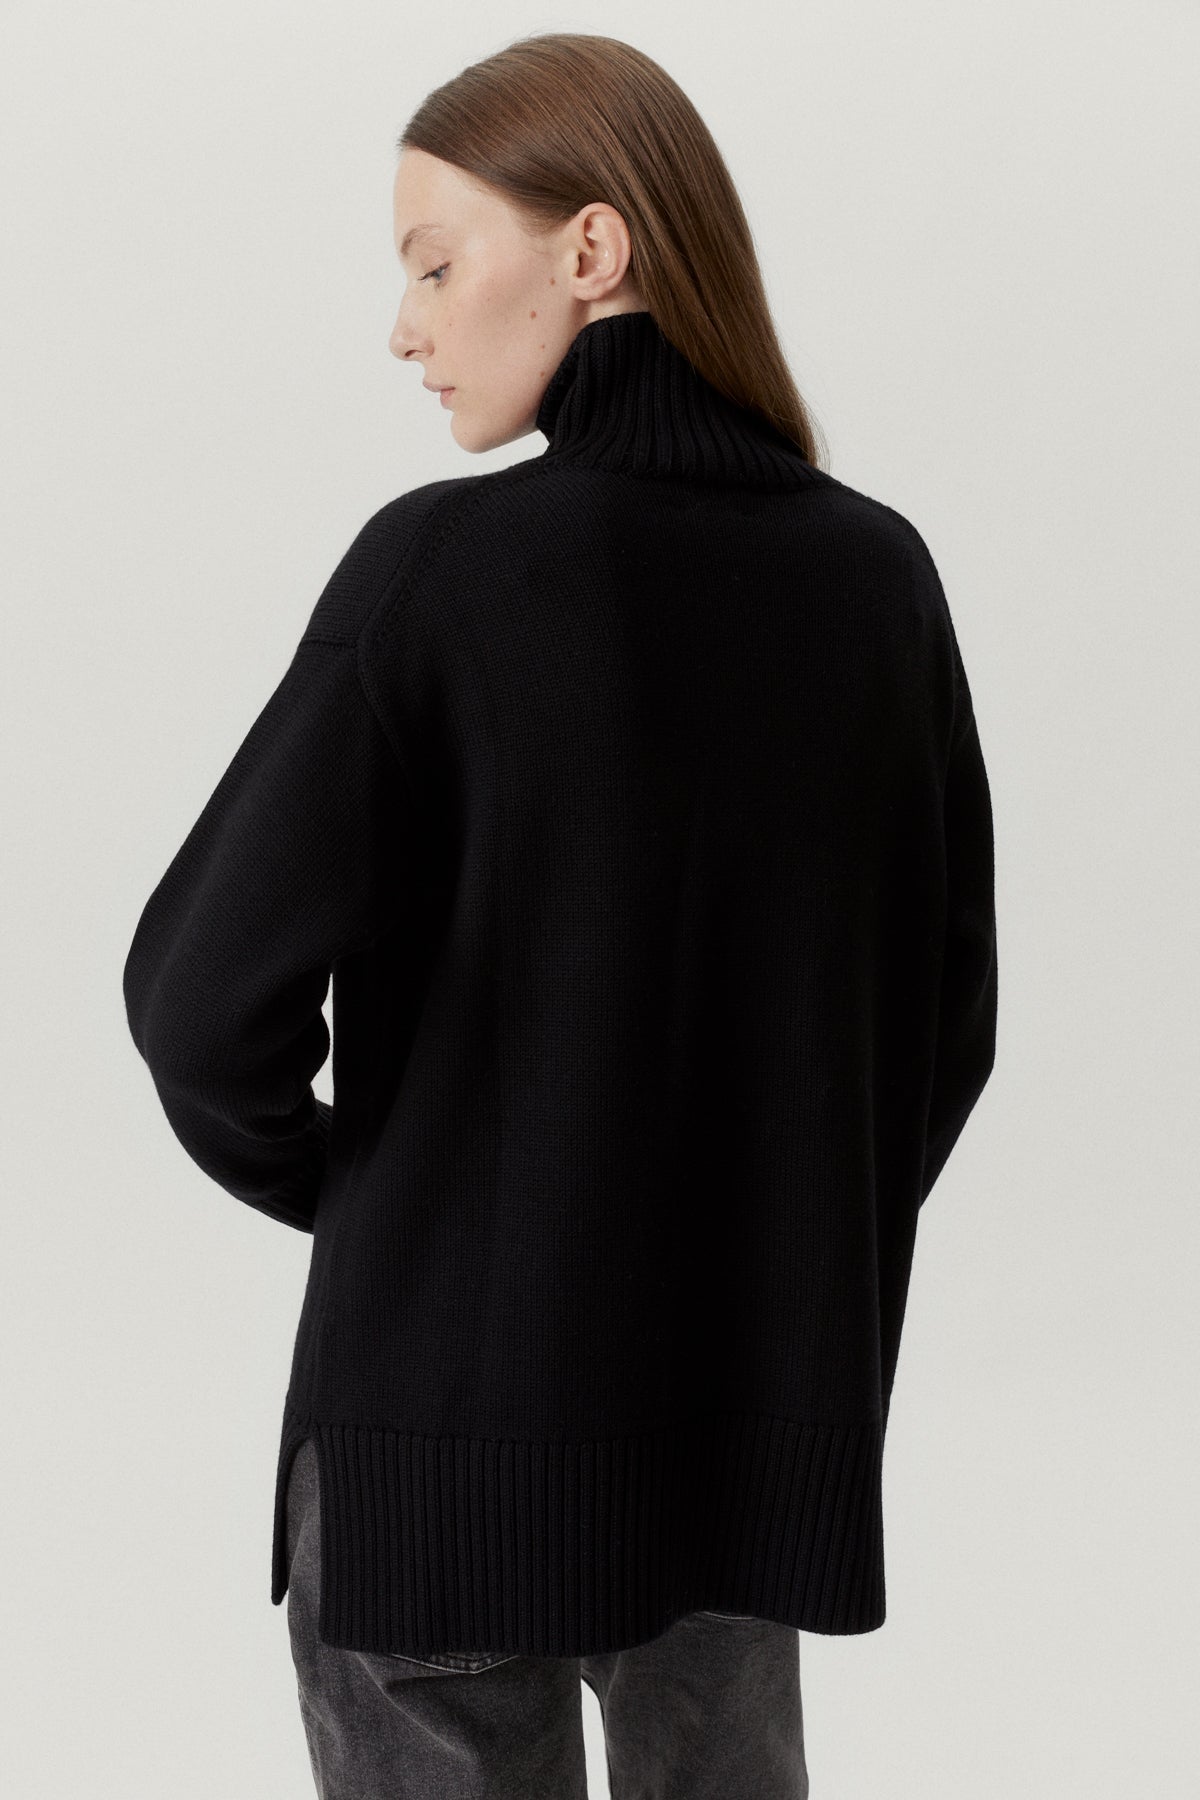 the merino wool oversize high neck black